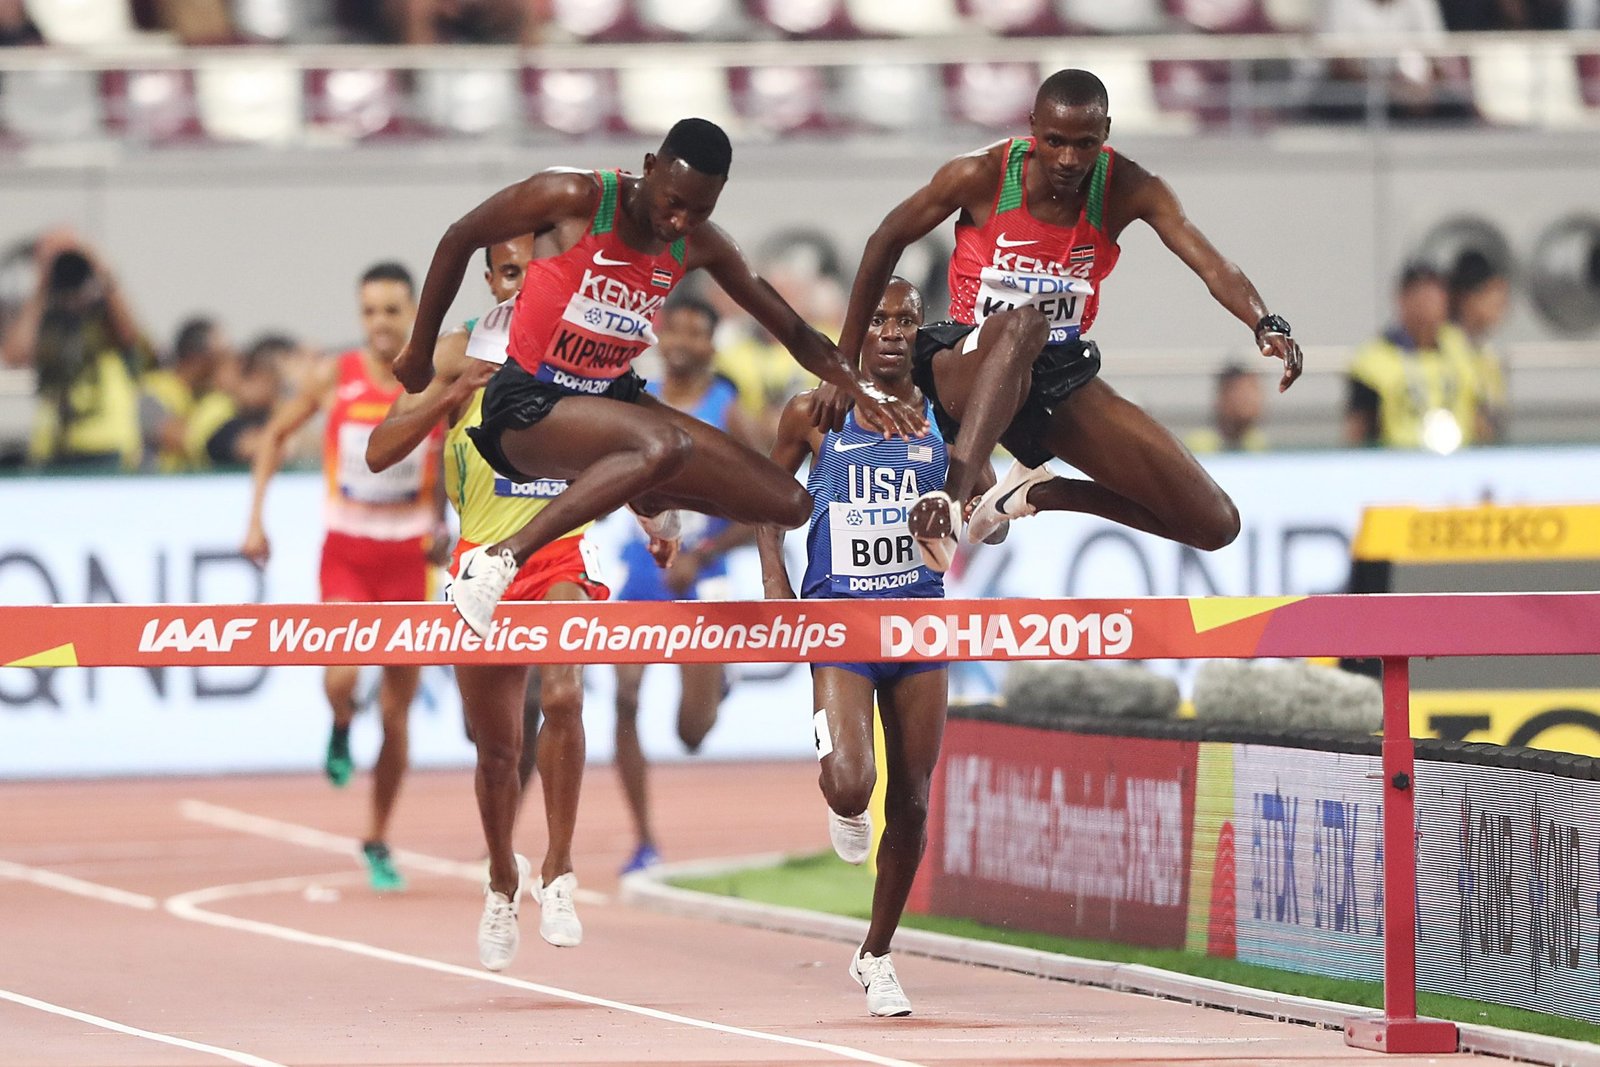 World Athletics to investigate air quality in Nairobi - Sports Leo